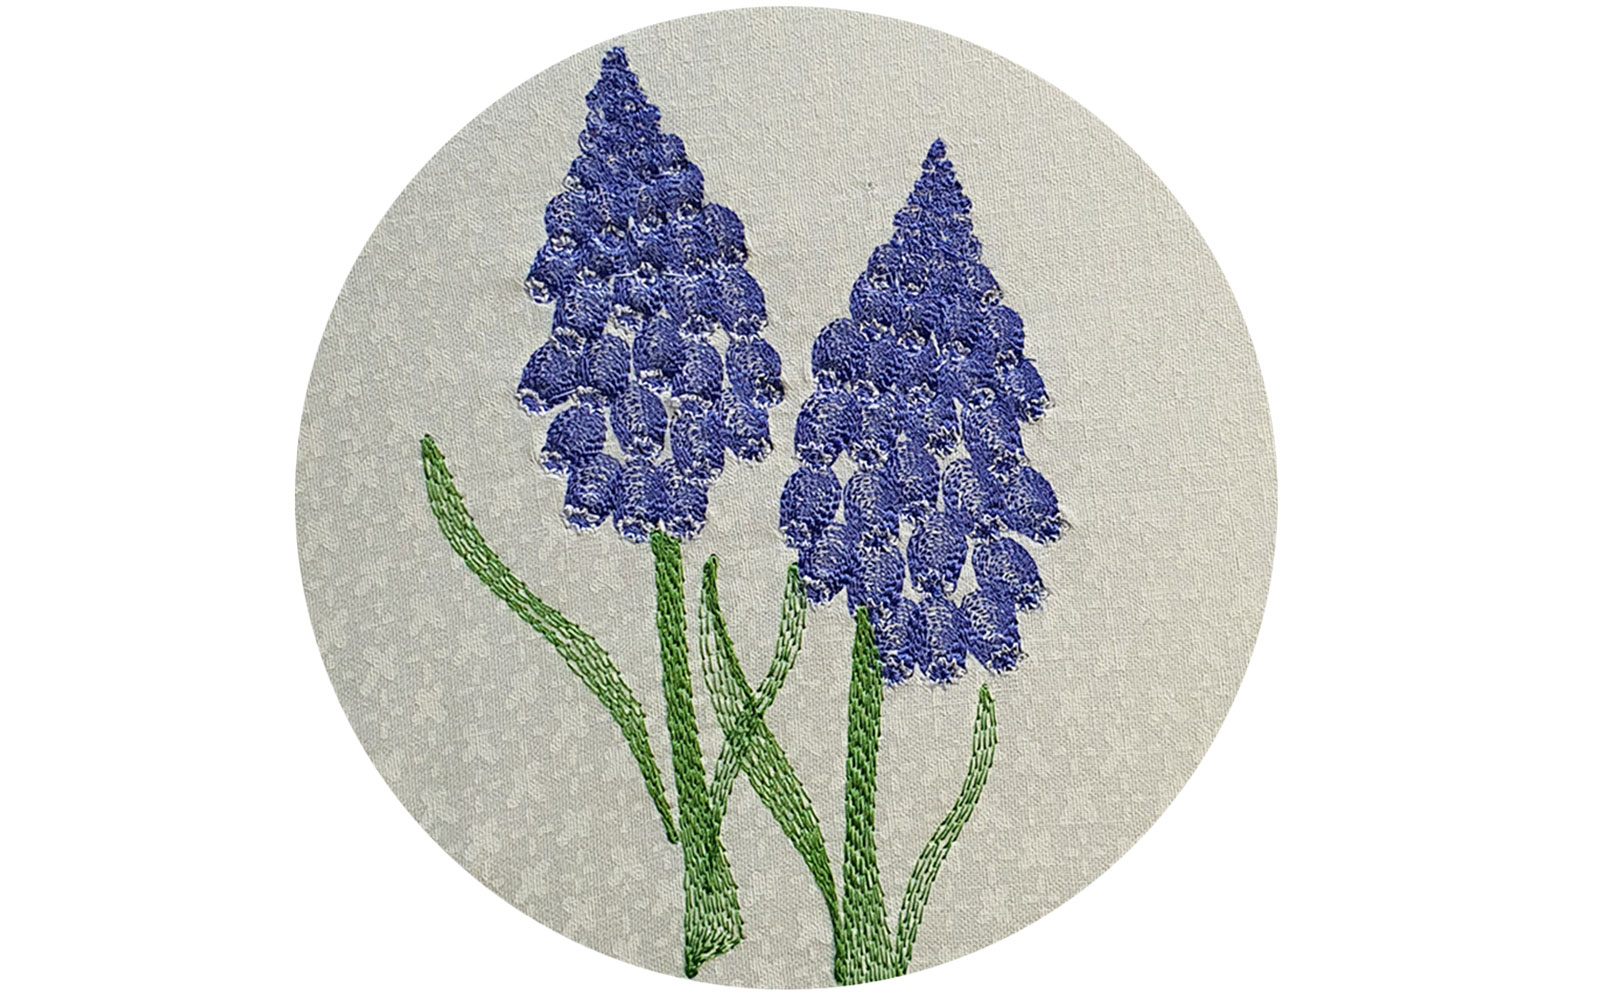 Two purple embroidered muskari flowers on white fabric